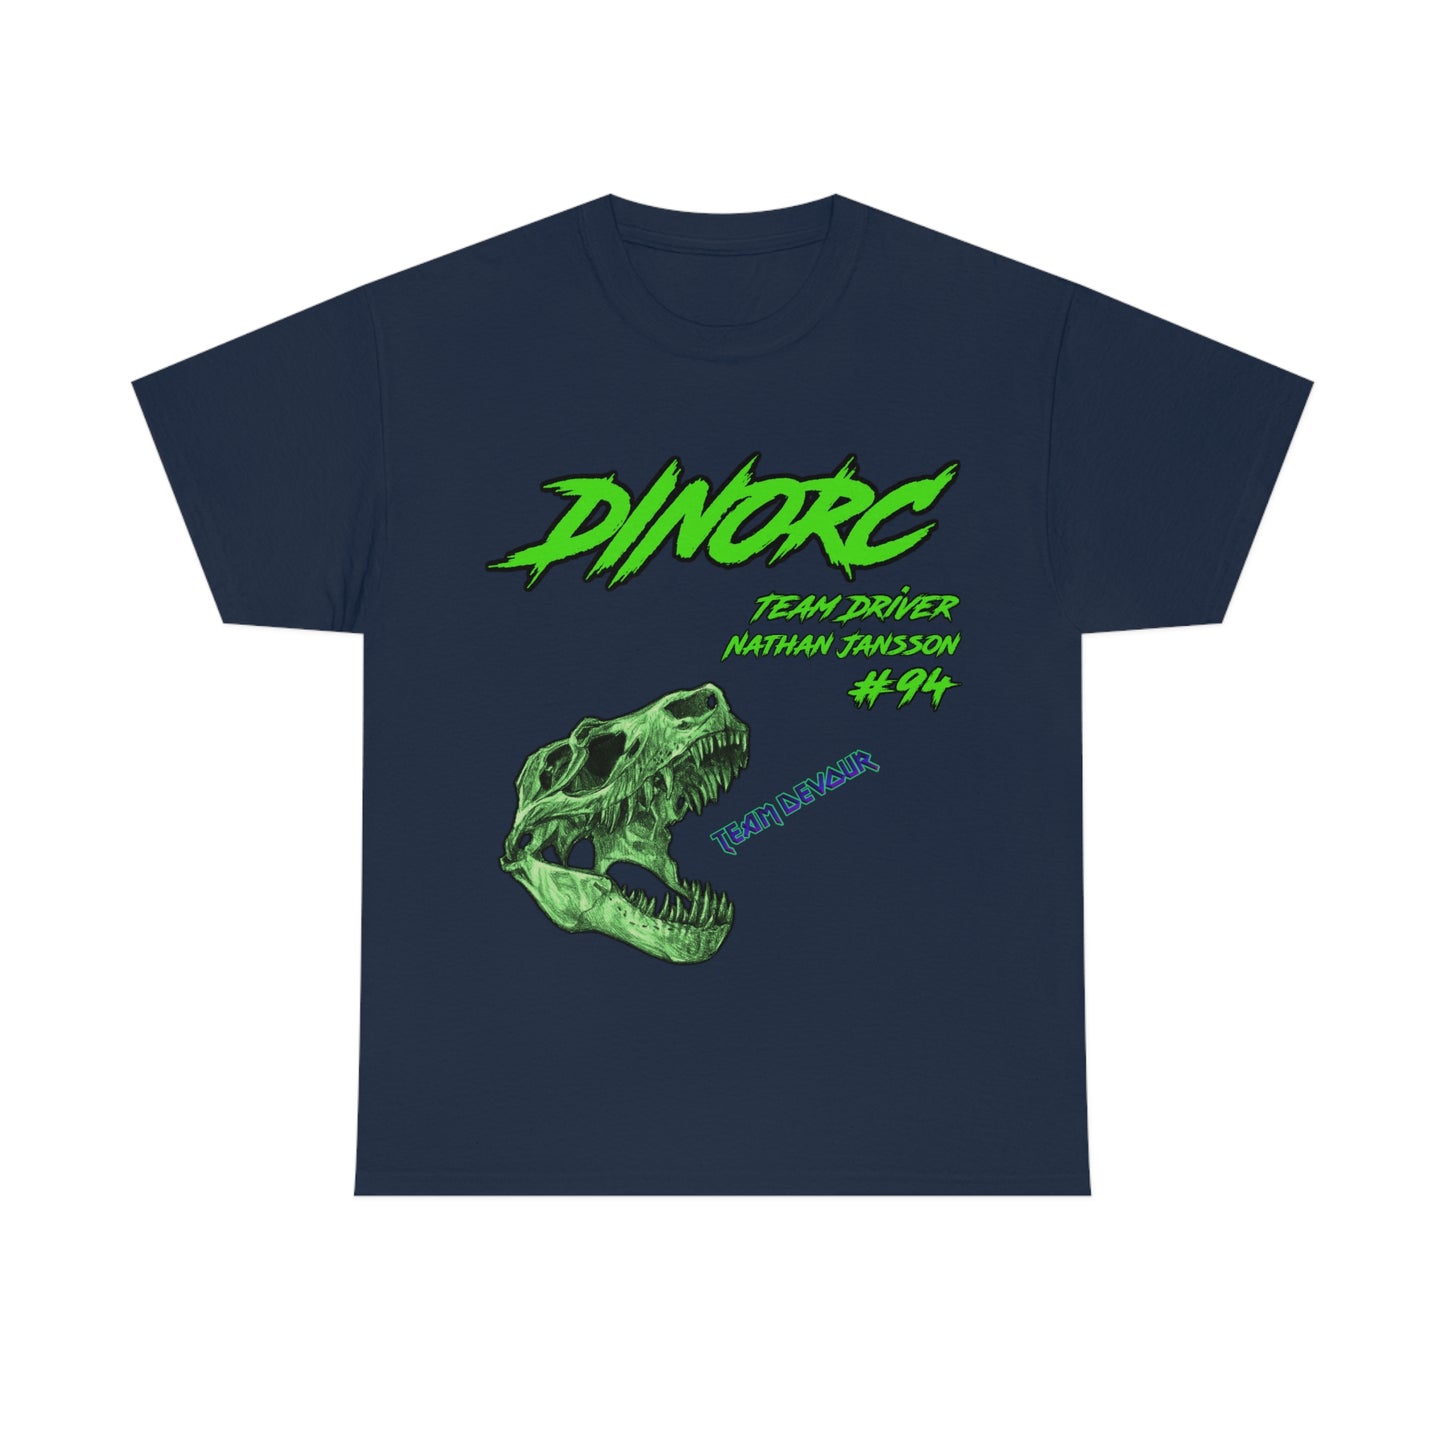 Team Driver Nathan Jansson Team Devour logo Front and Back DinoRc Logo T-Shirt S-5x 5 colors